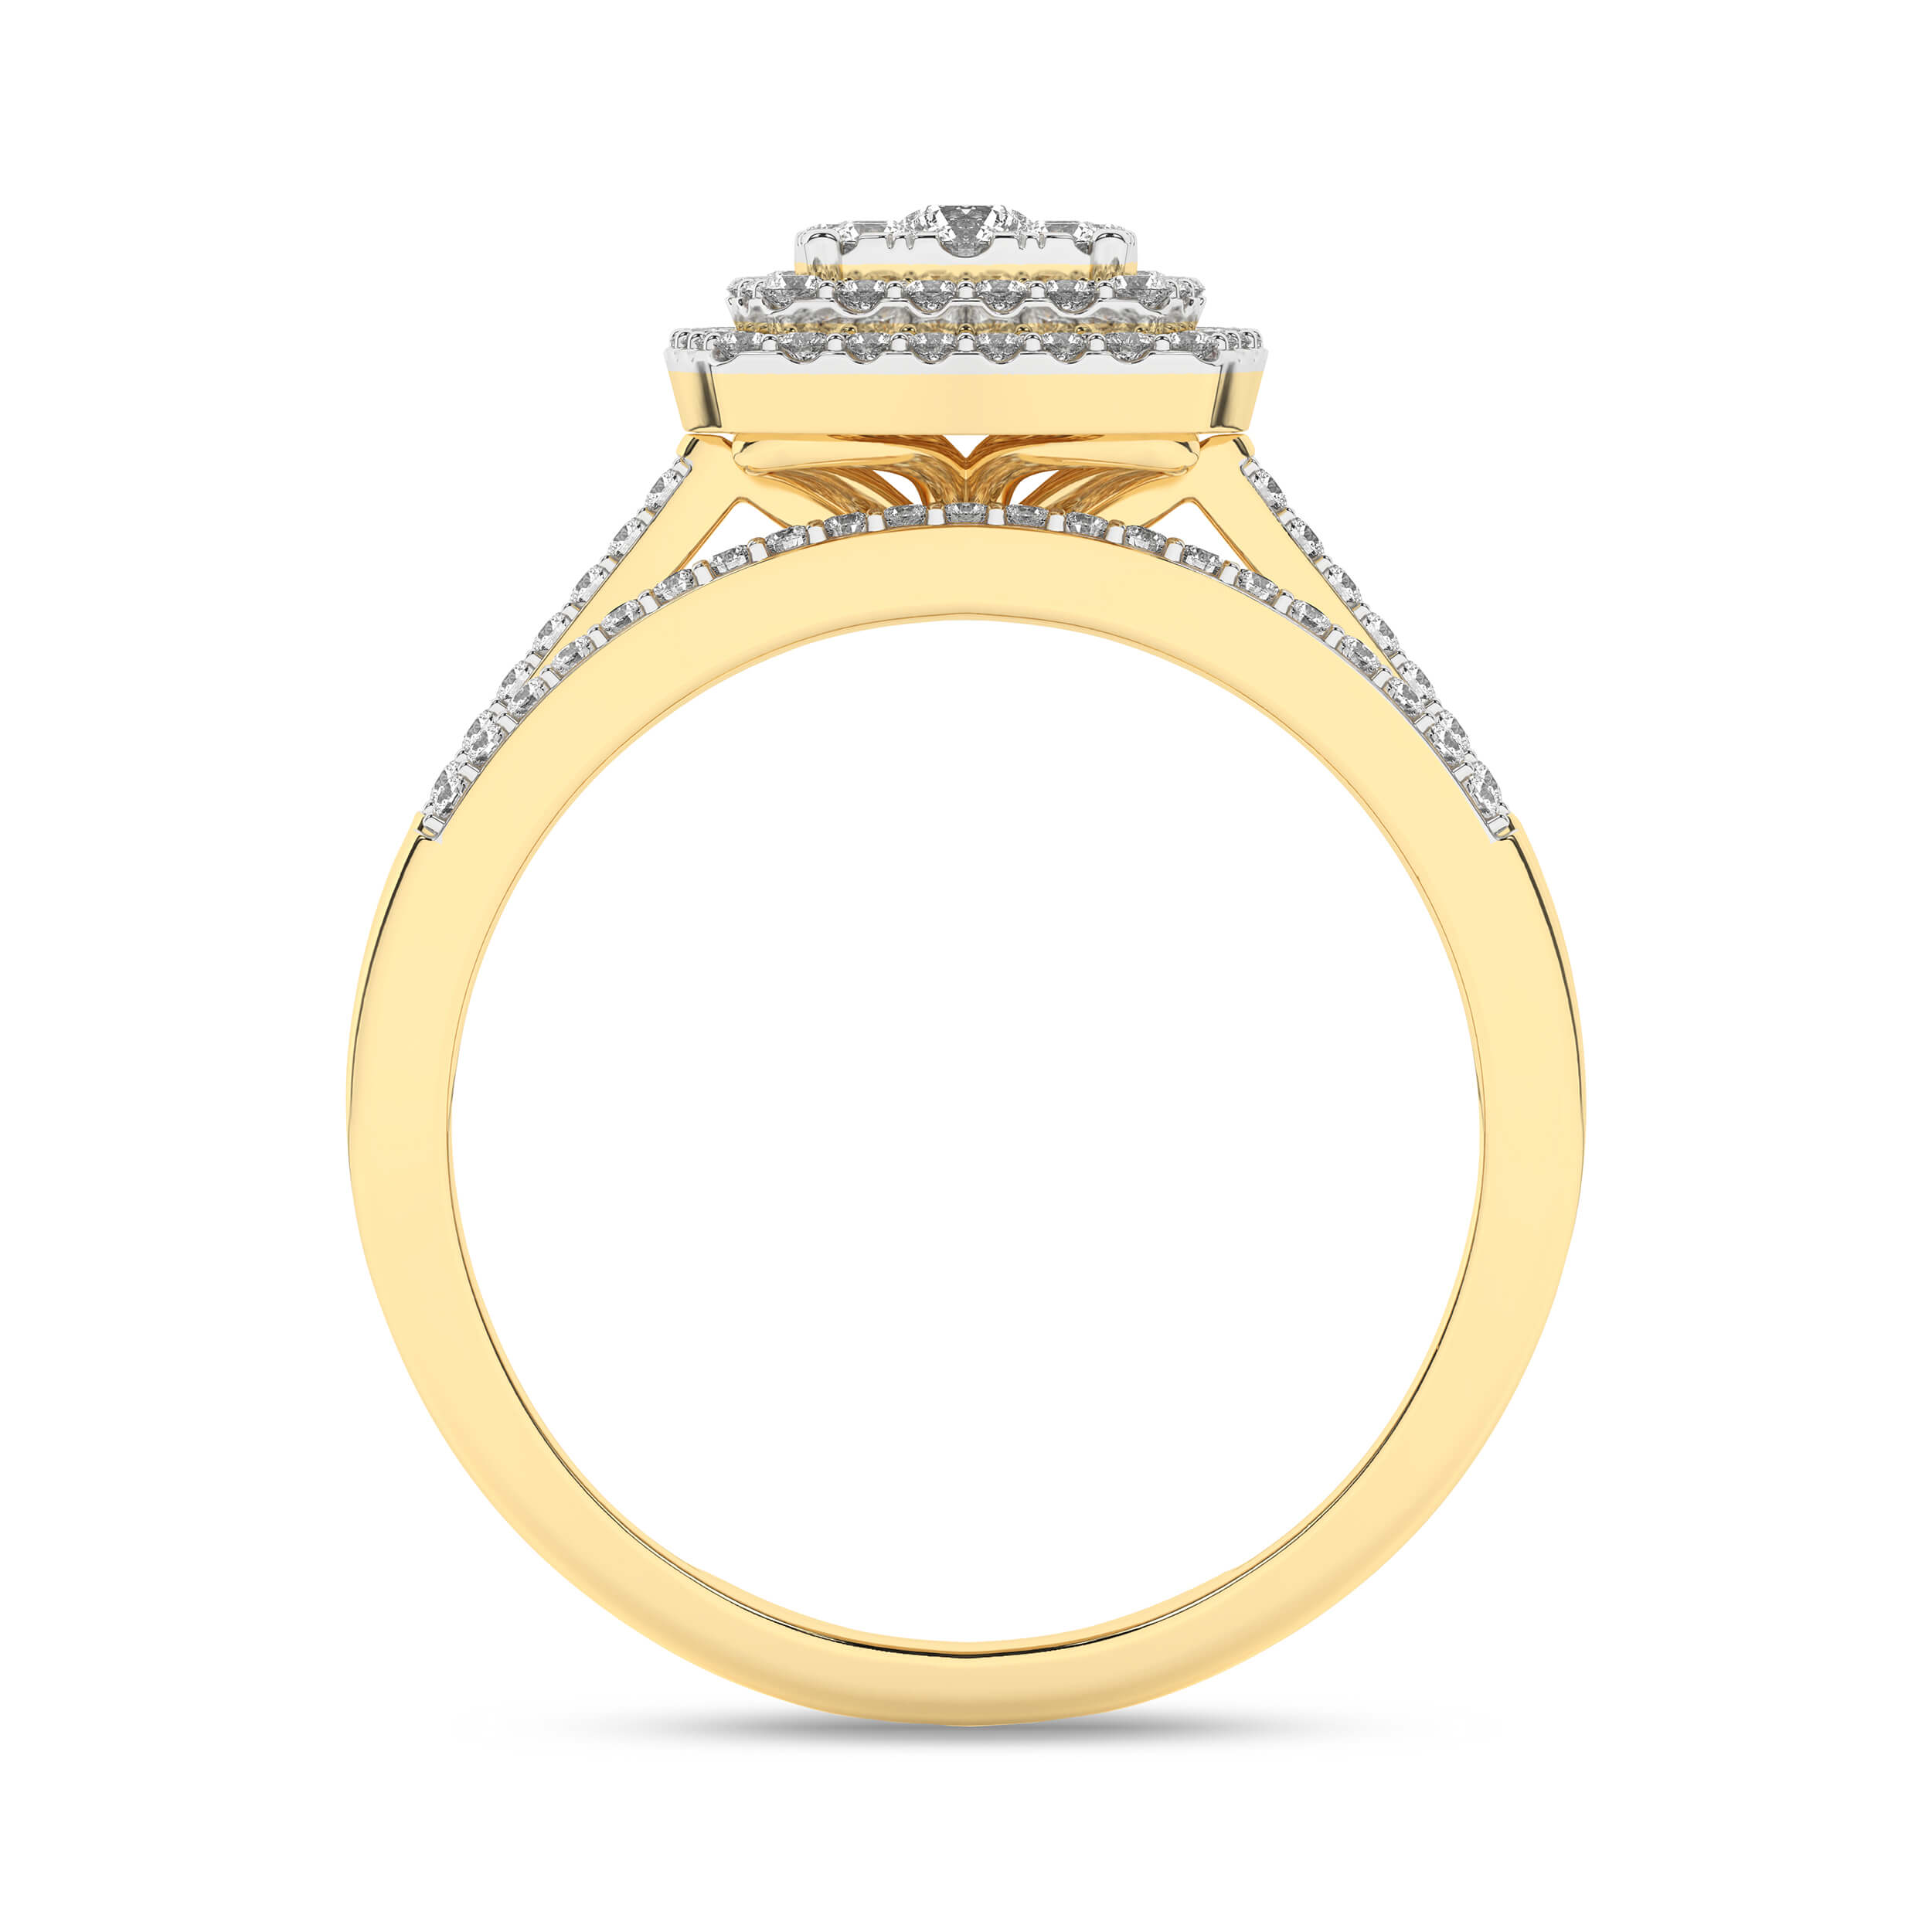 Inel de logodna din Aur Galben 14K cu Diamante 0.33Ct, articol RB15449, previzualizare foto 1